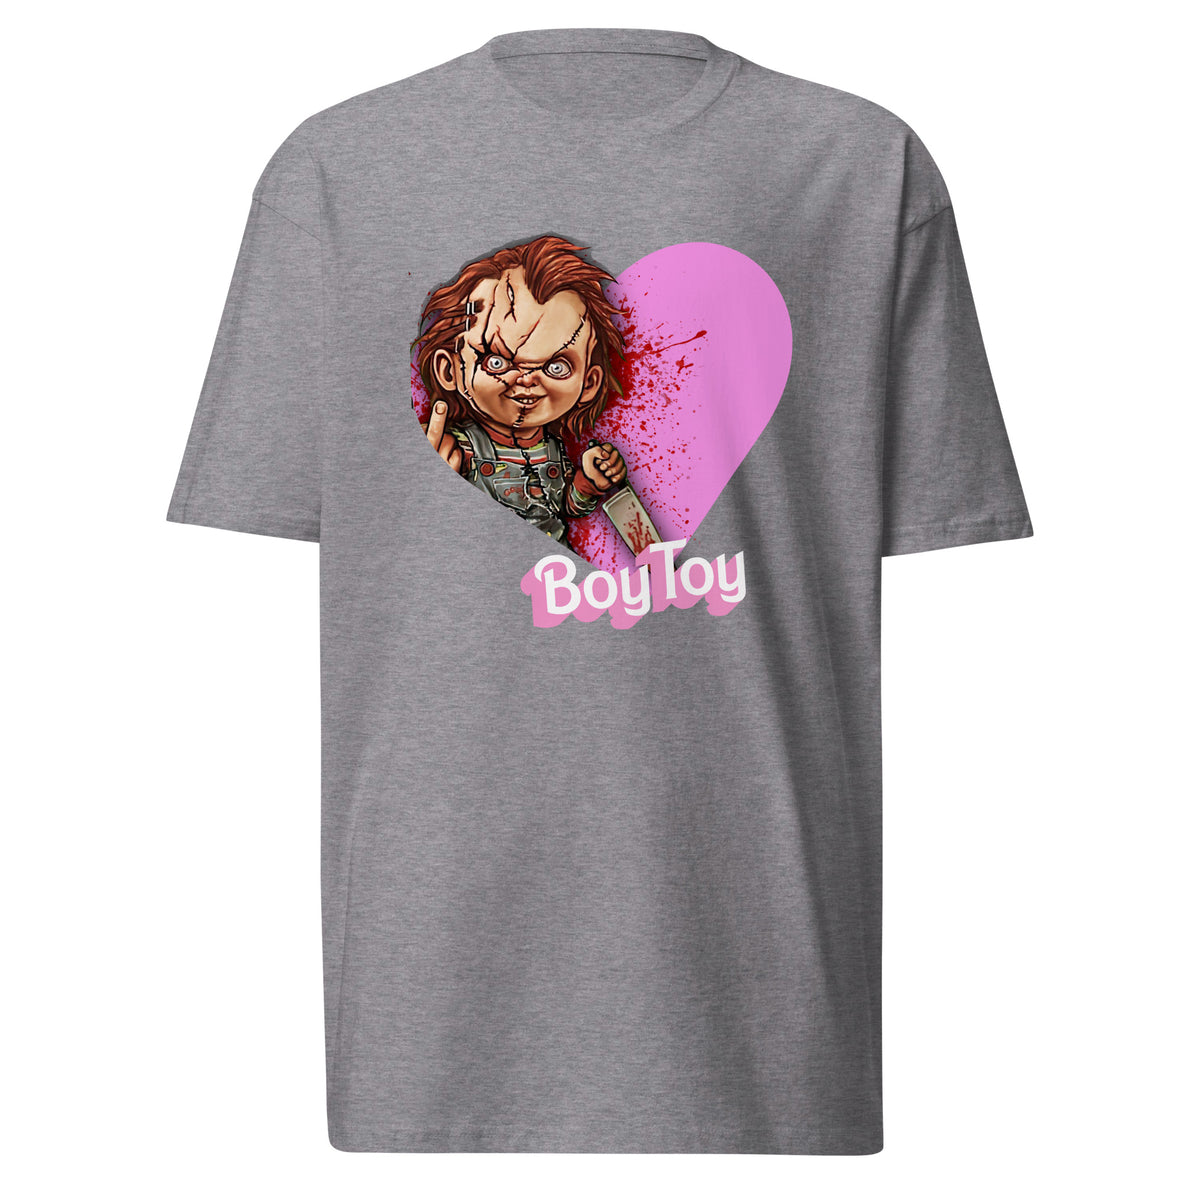 Men’s Boy Toy (Chucky) T-Shirt